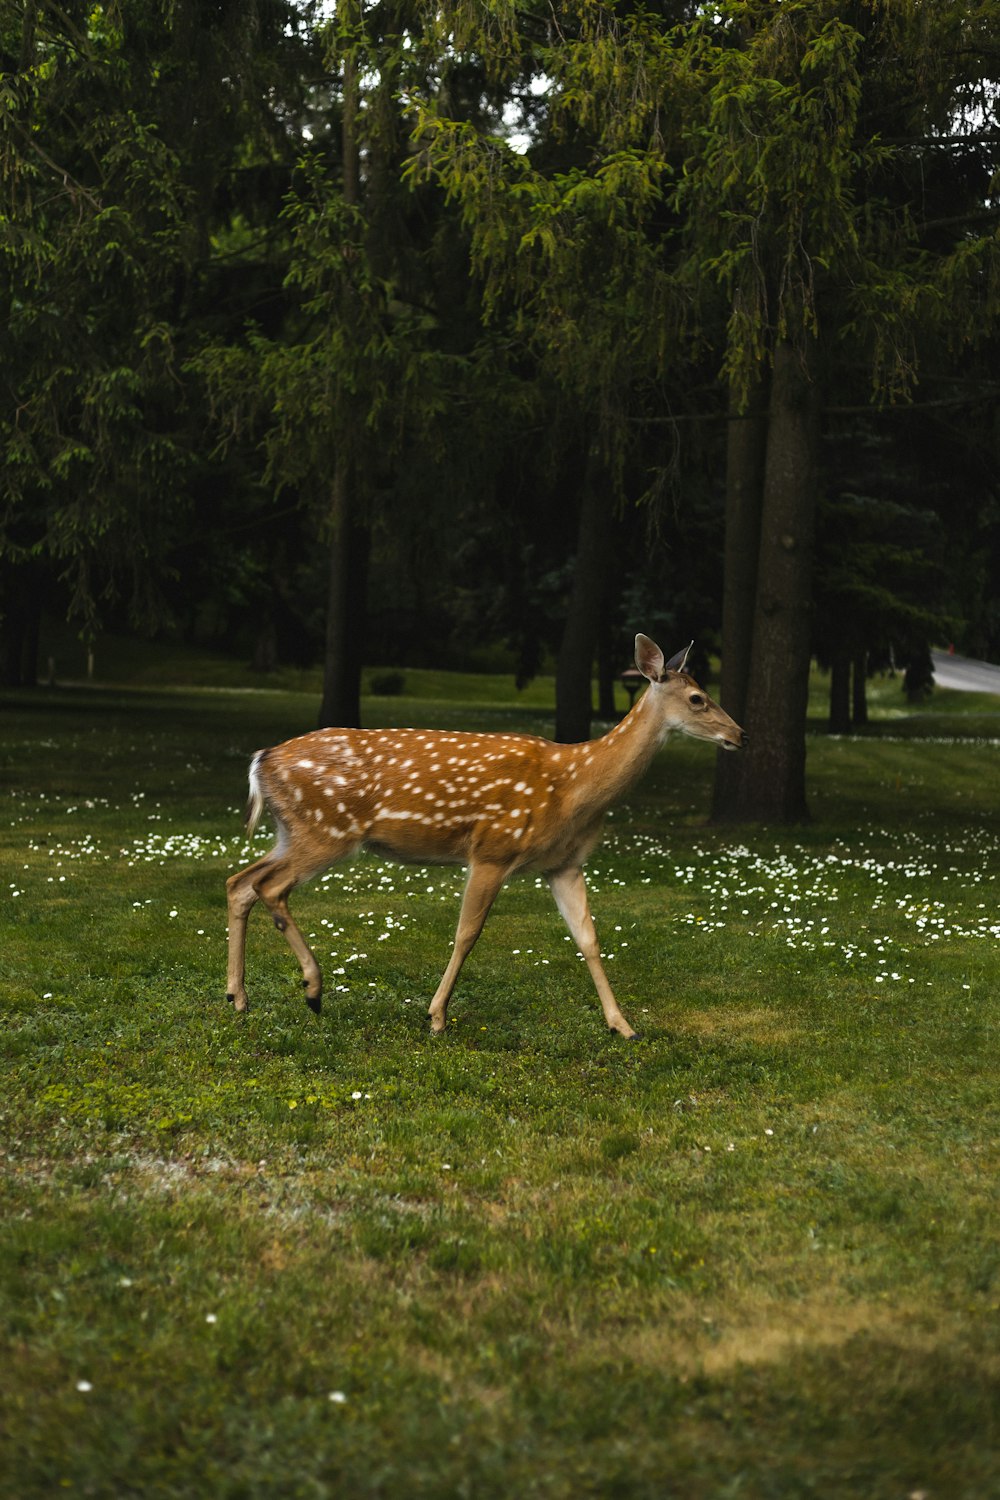 a small deer is walking through the grass